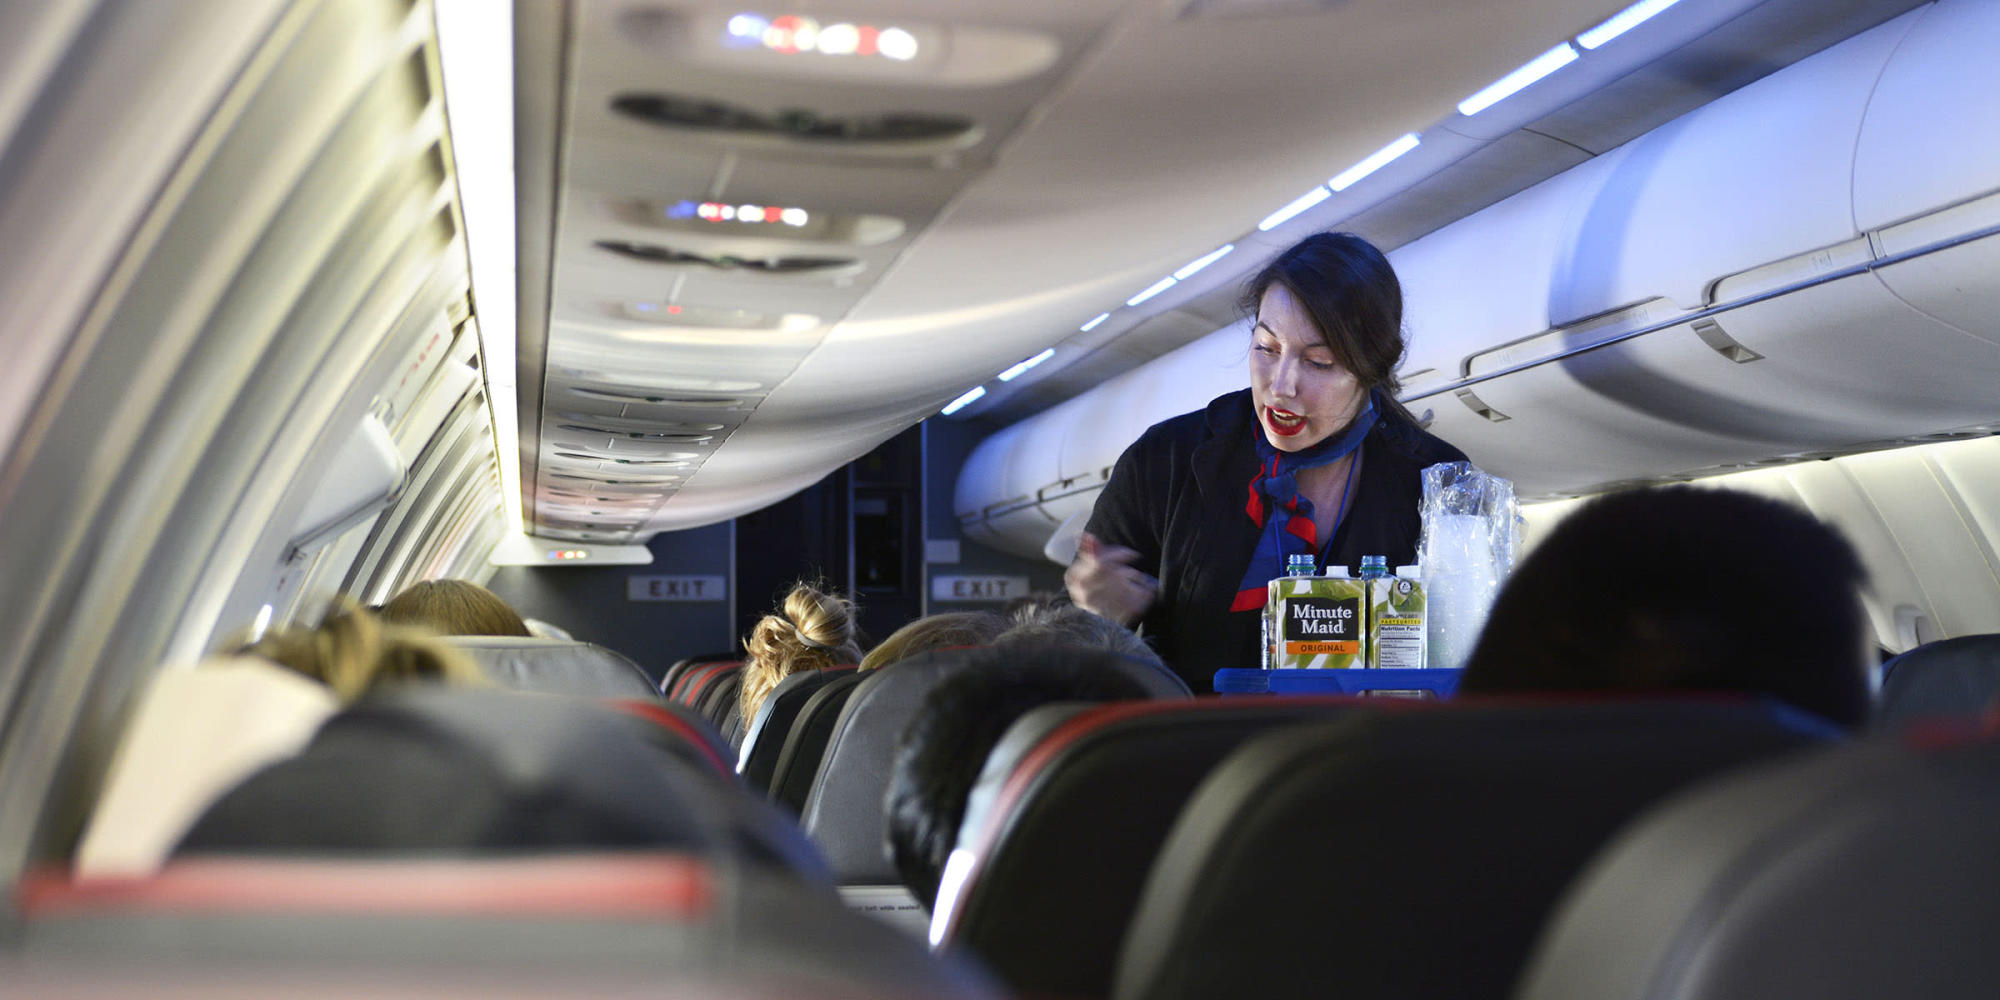 WestJet Airlines Review: Rewards And Flying Economy - Forever Karen